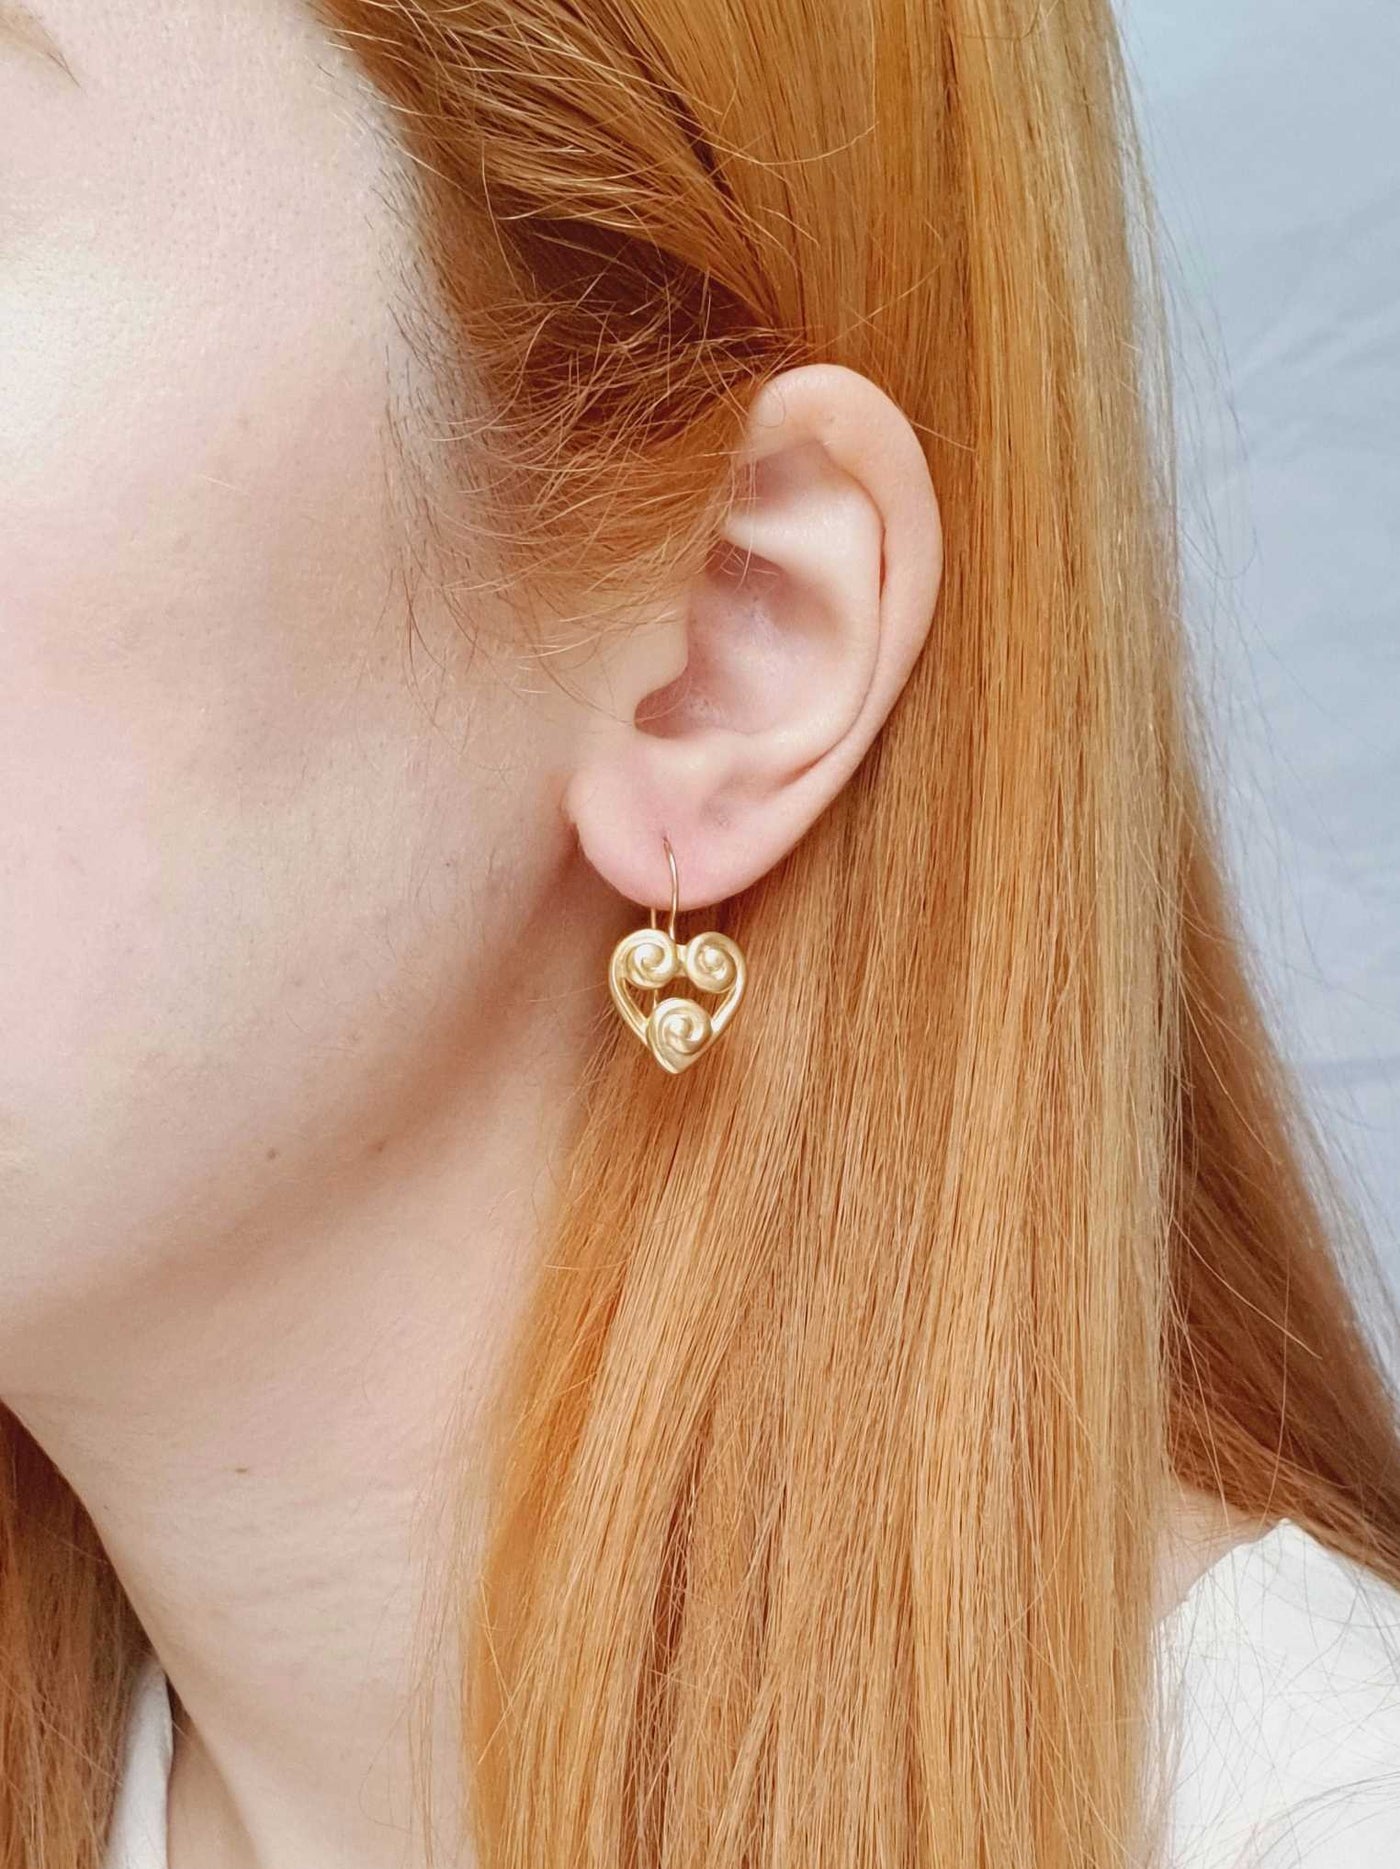 Vintage Gold Plated Heart Drop Earrings